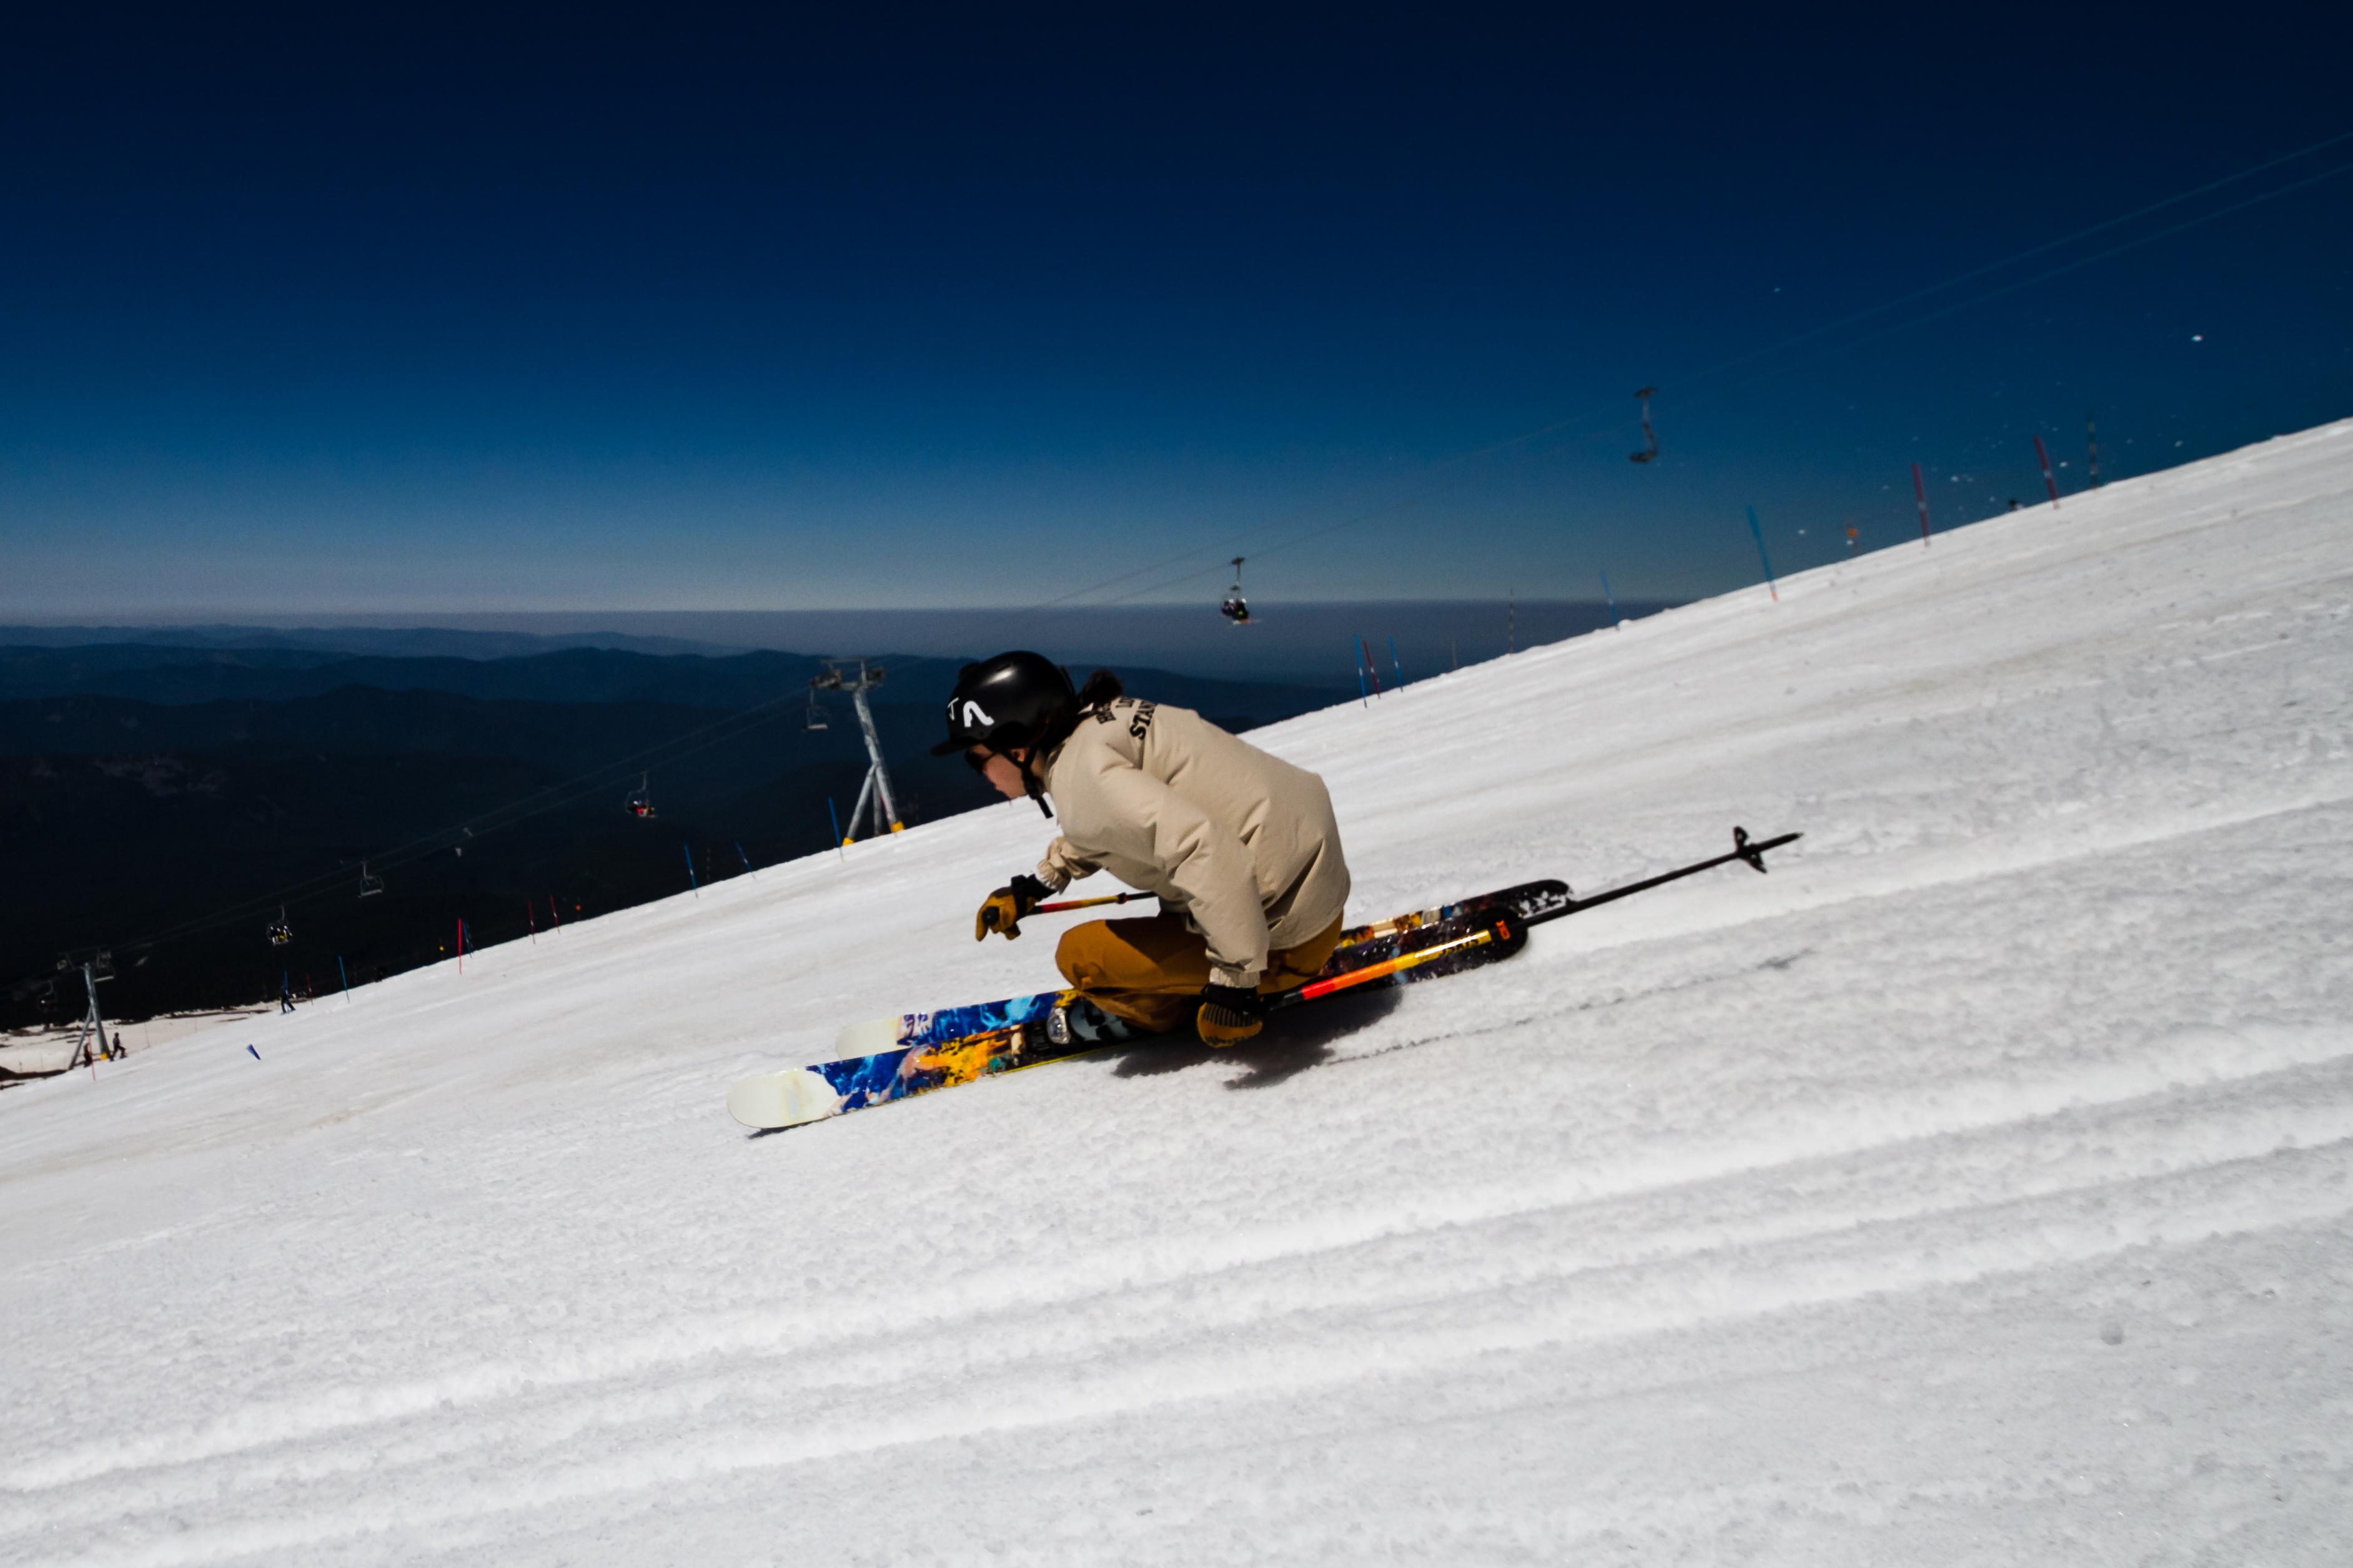 The Fastforward "LARCHES" David Langevin x J Collab Limited Edition Ski Shredding Image